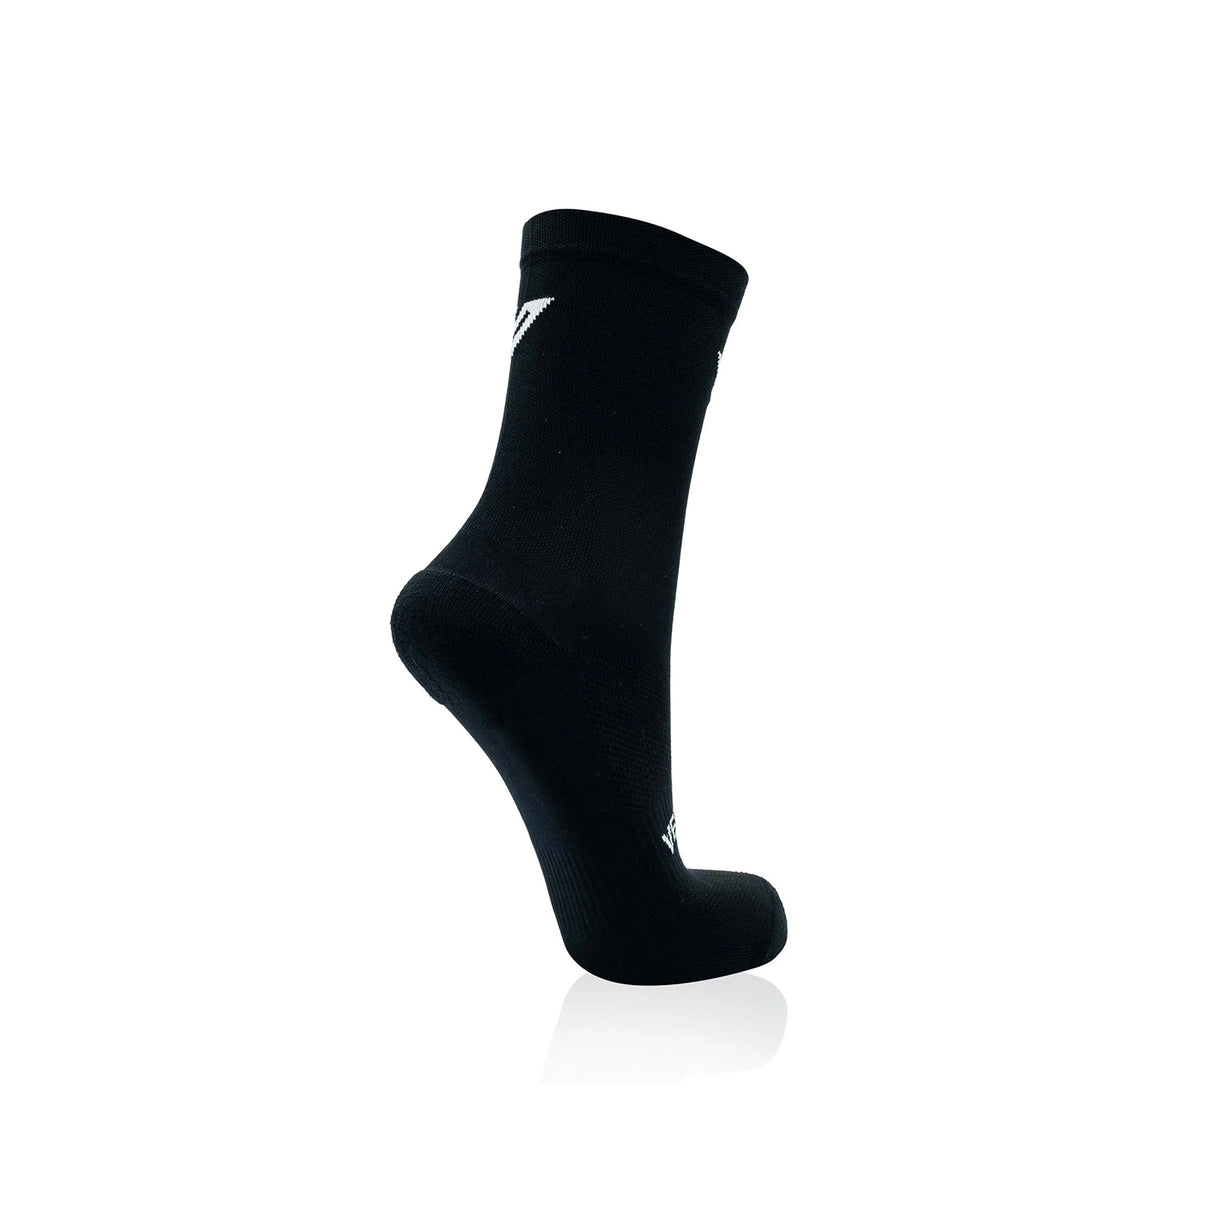 Versus Black Active Socks